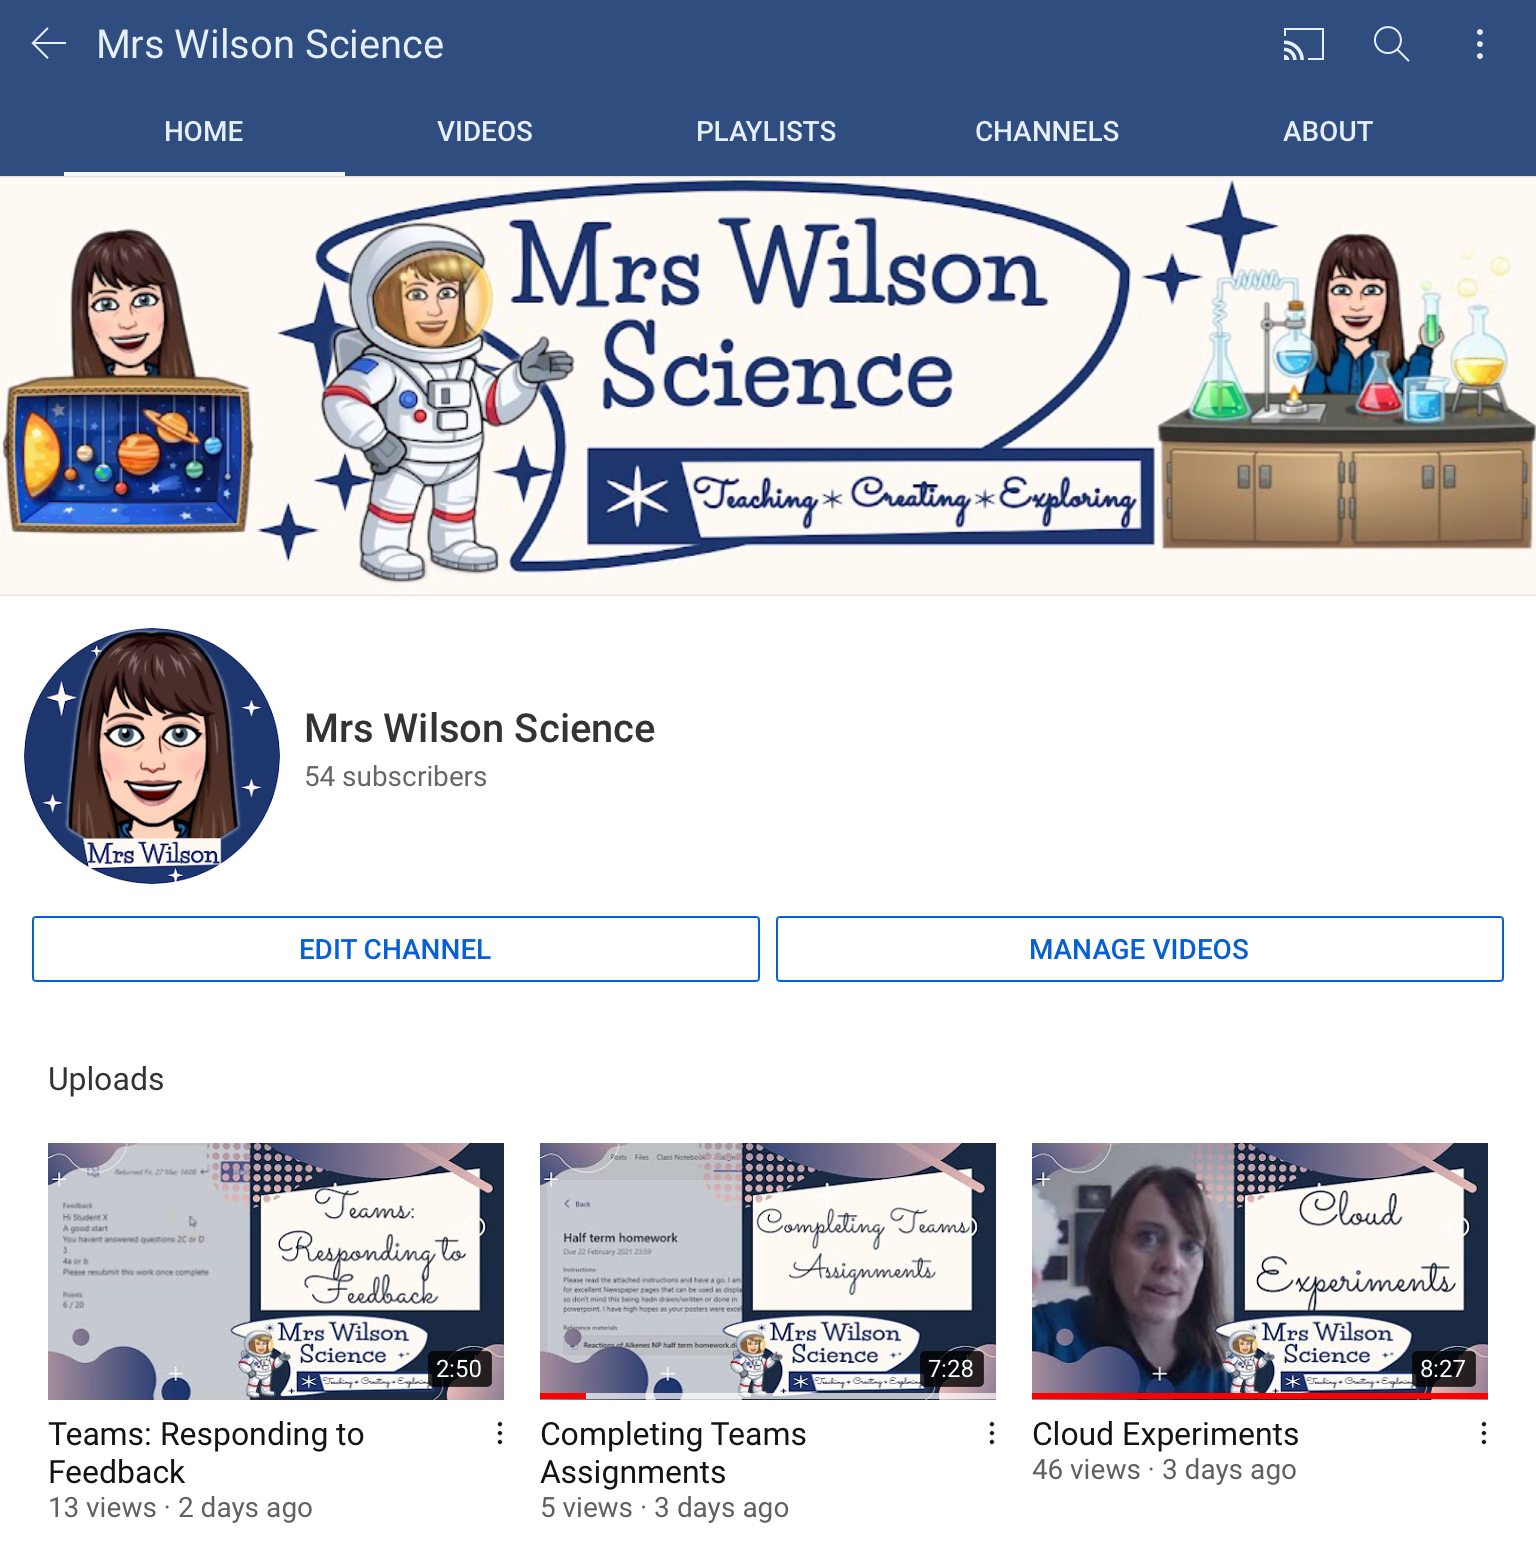 Mrs Wilson Science on YouTube